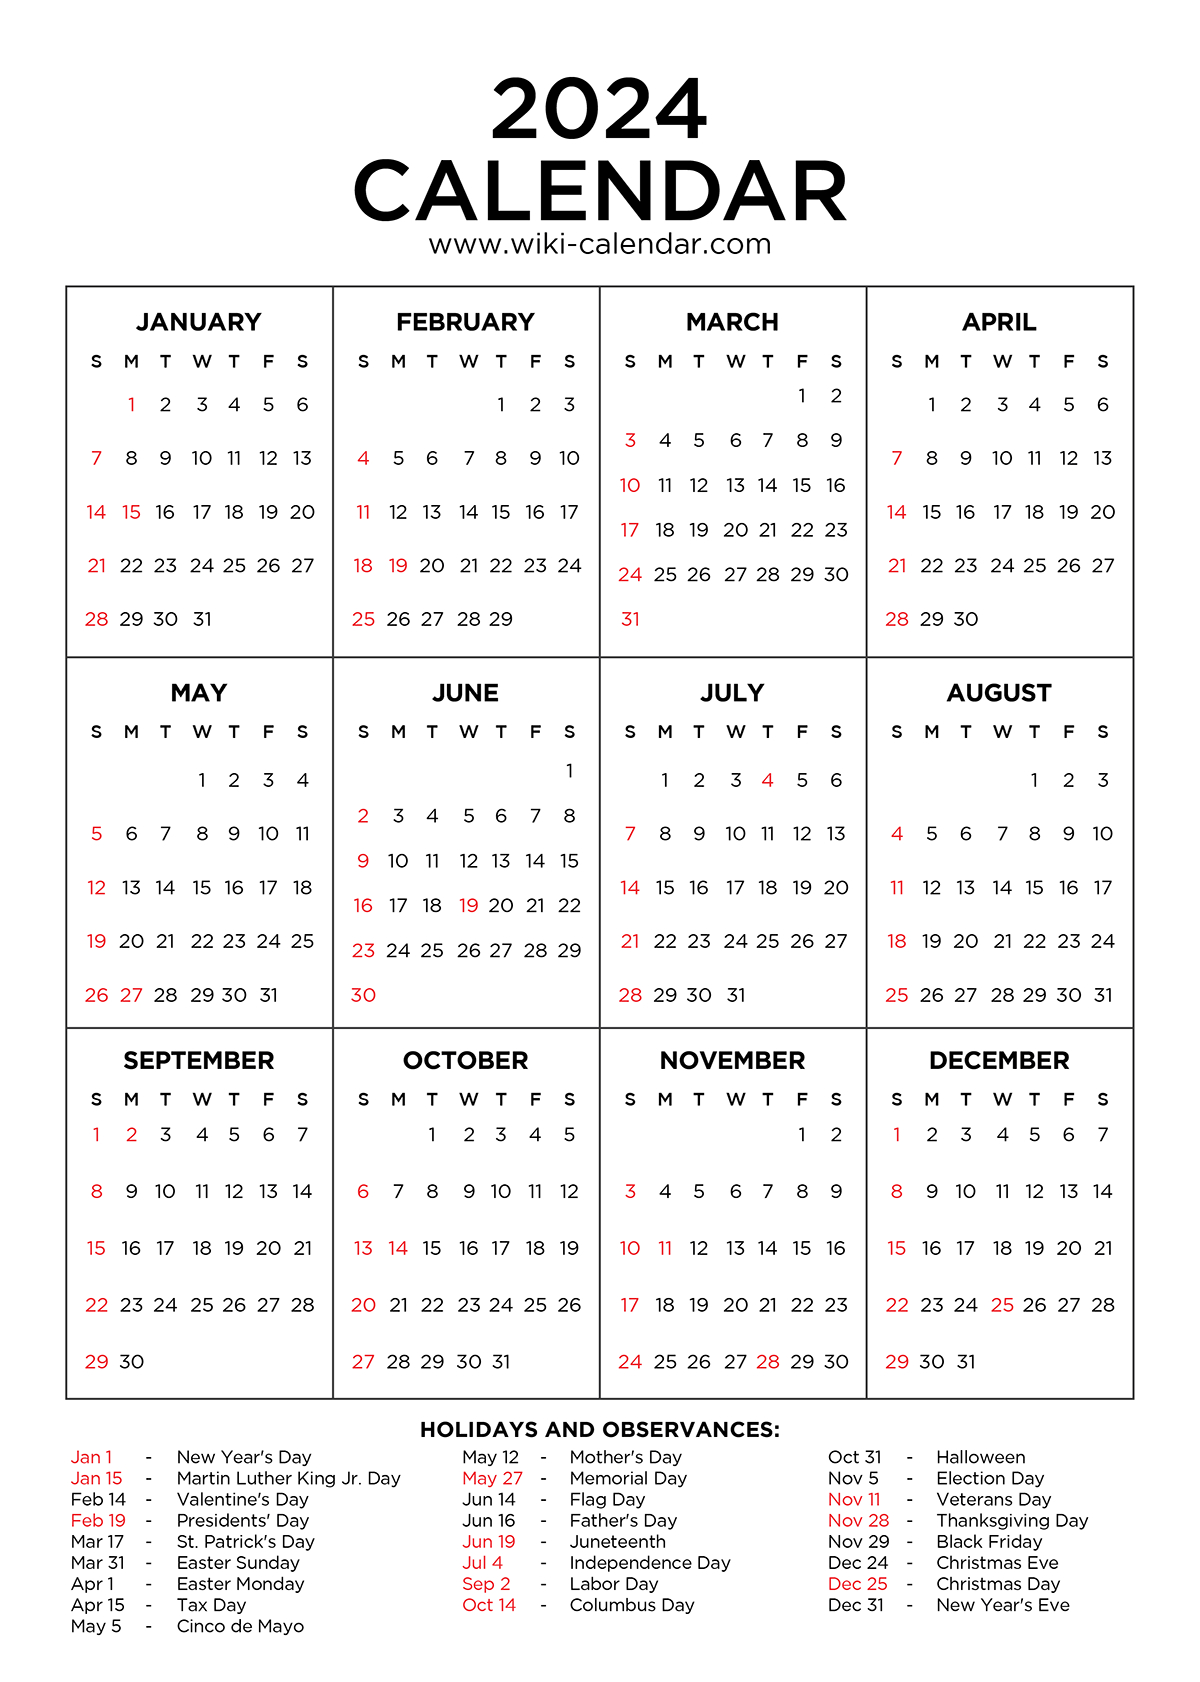 Year 2024 Calendar Printable With Holidays - Wiki Calendar | Printable Calendar For Year 2024 United States